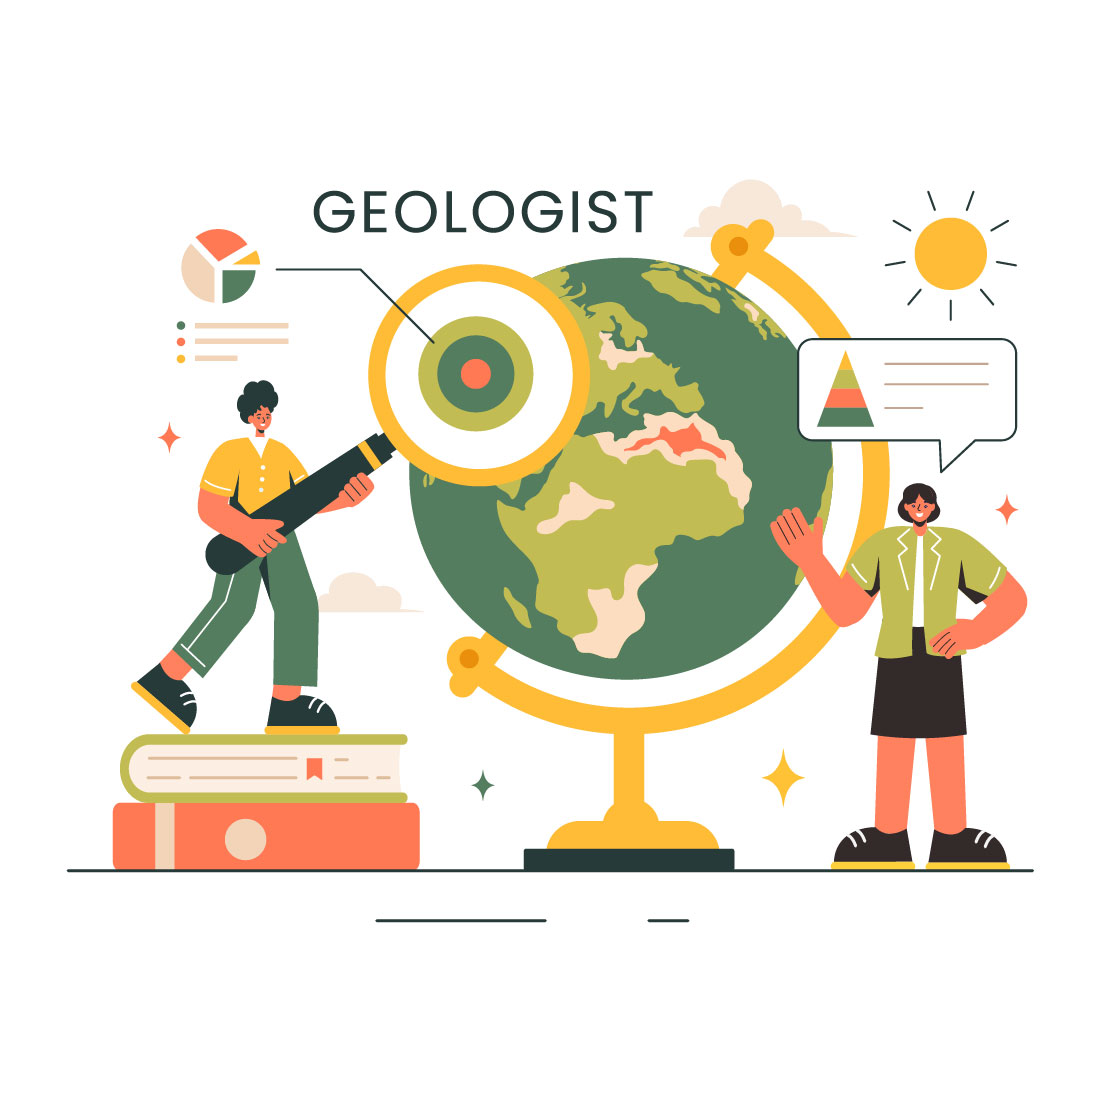 10 Geologist Soil Analysis Illustration cover image.